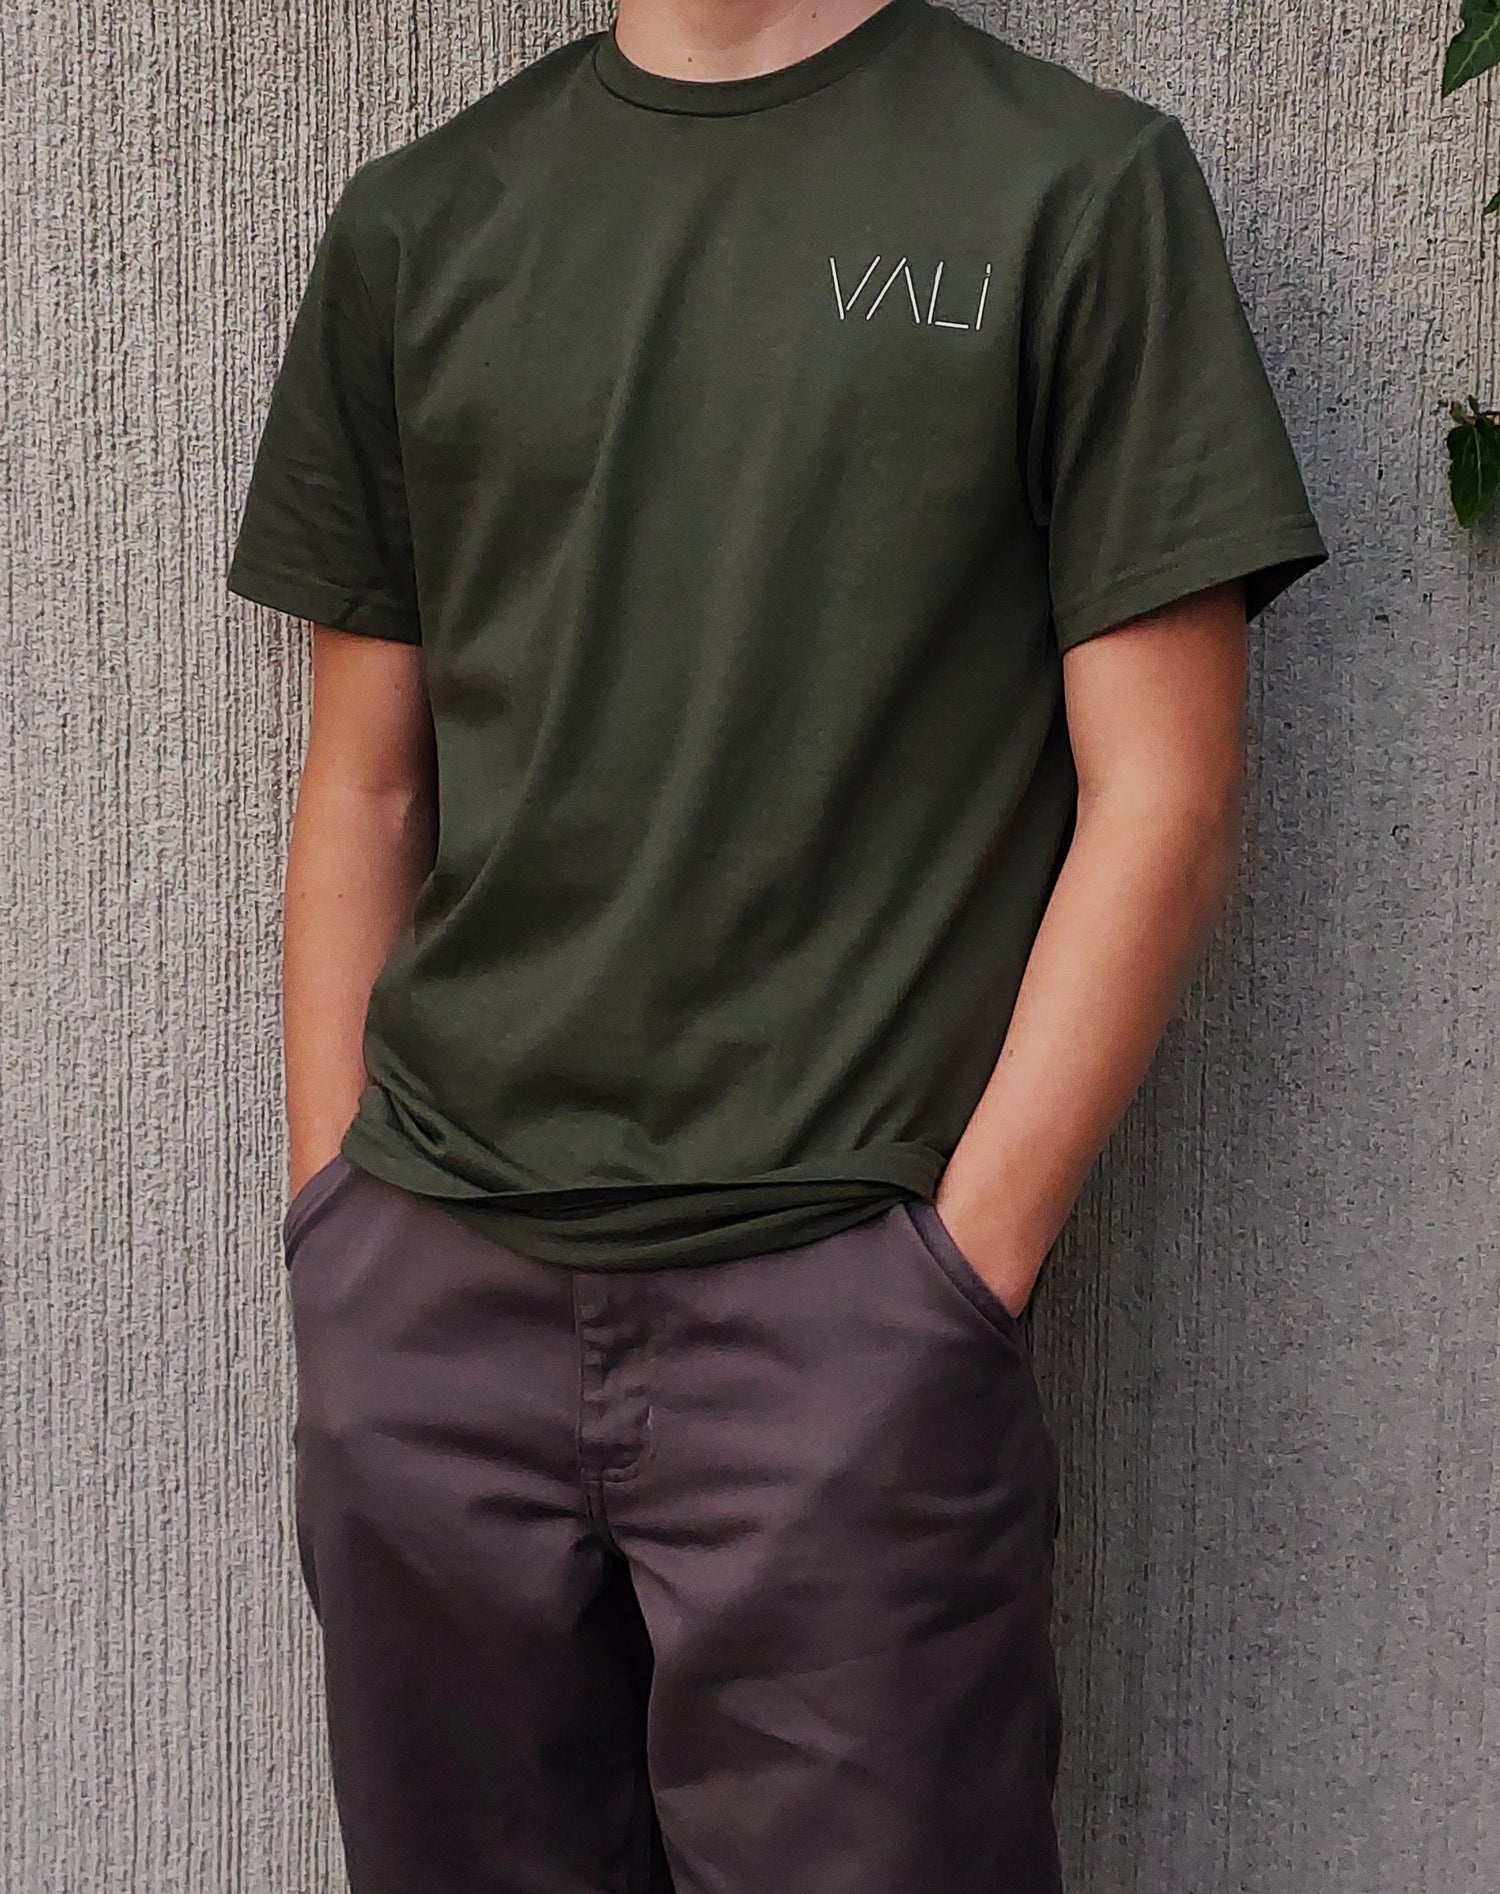 Green VALI T-shirt